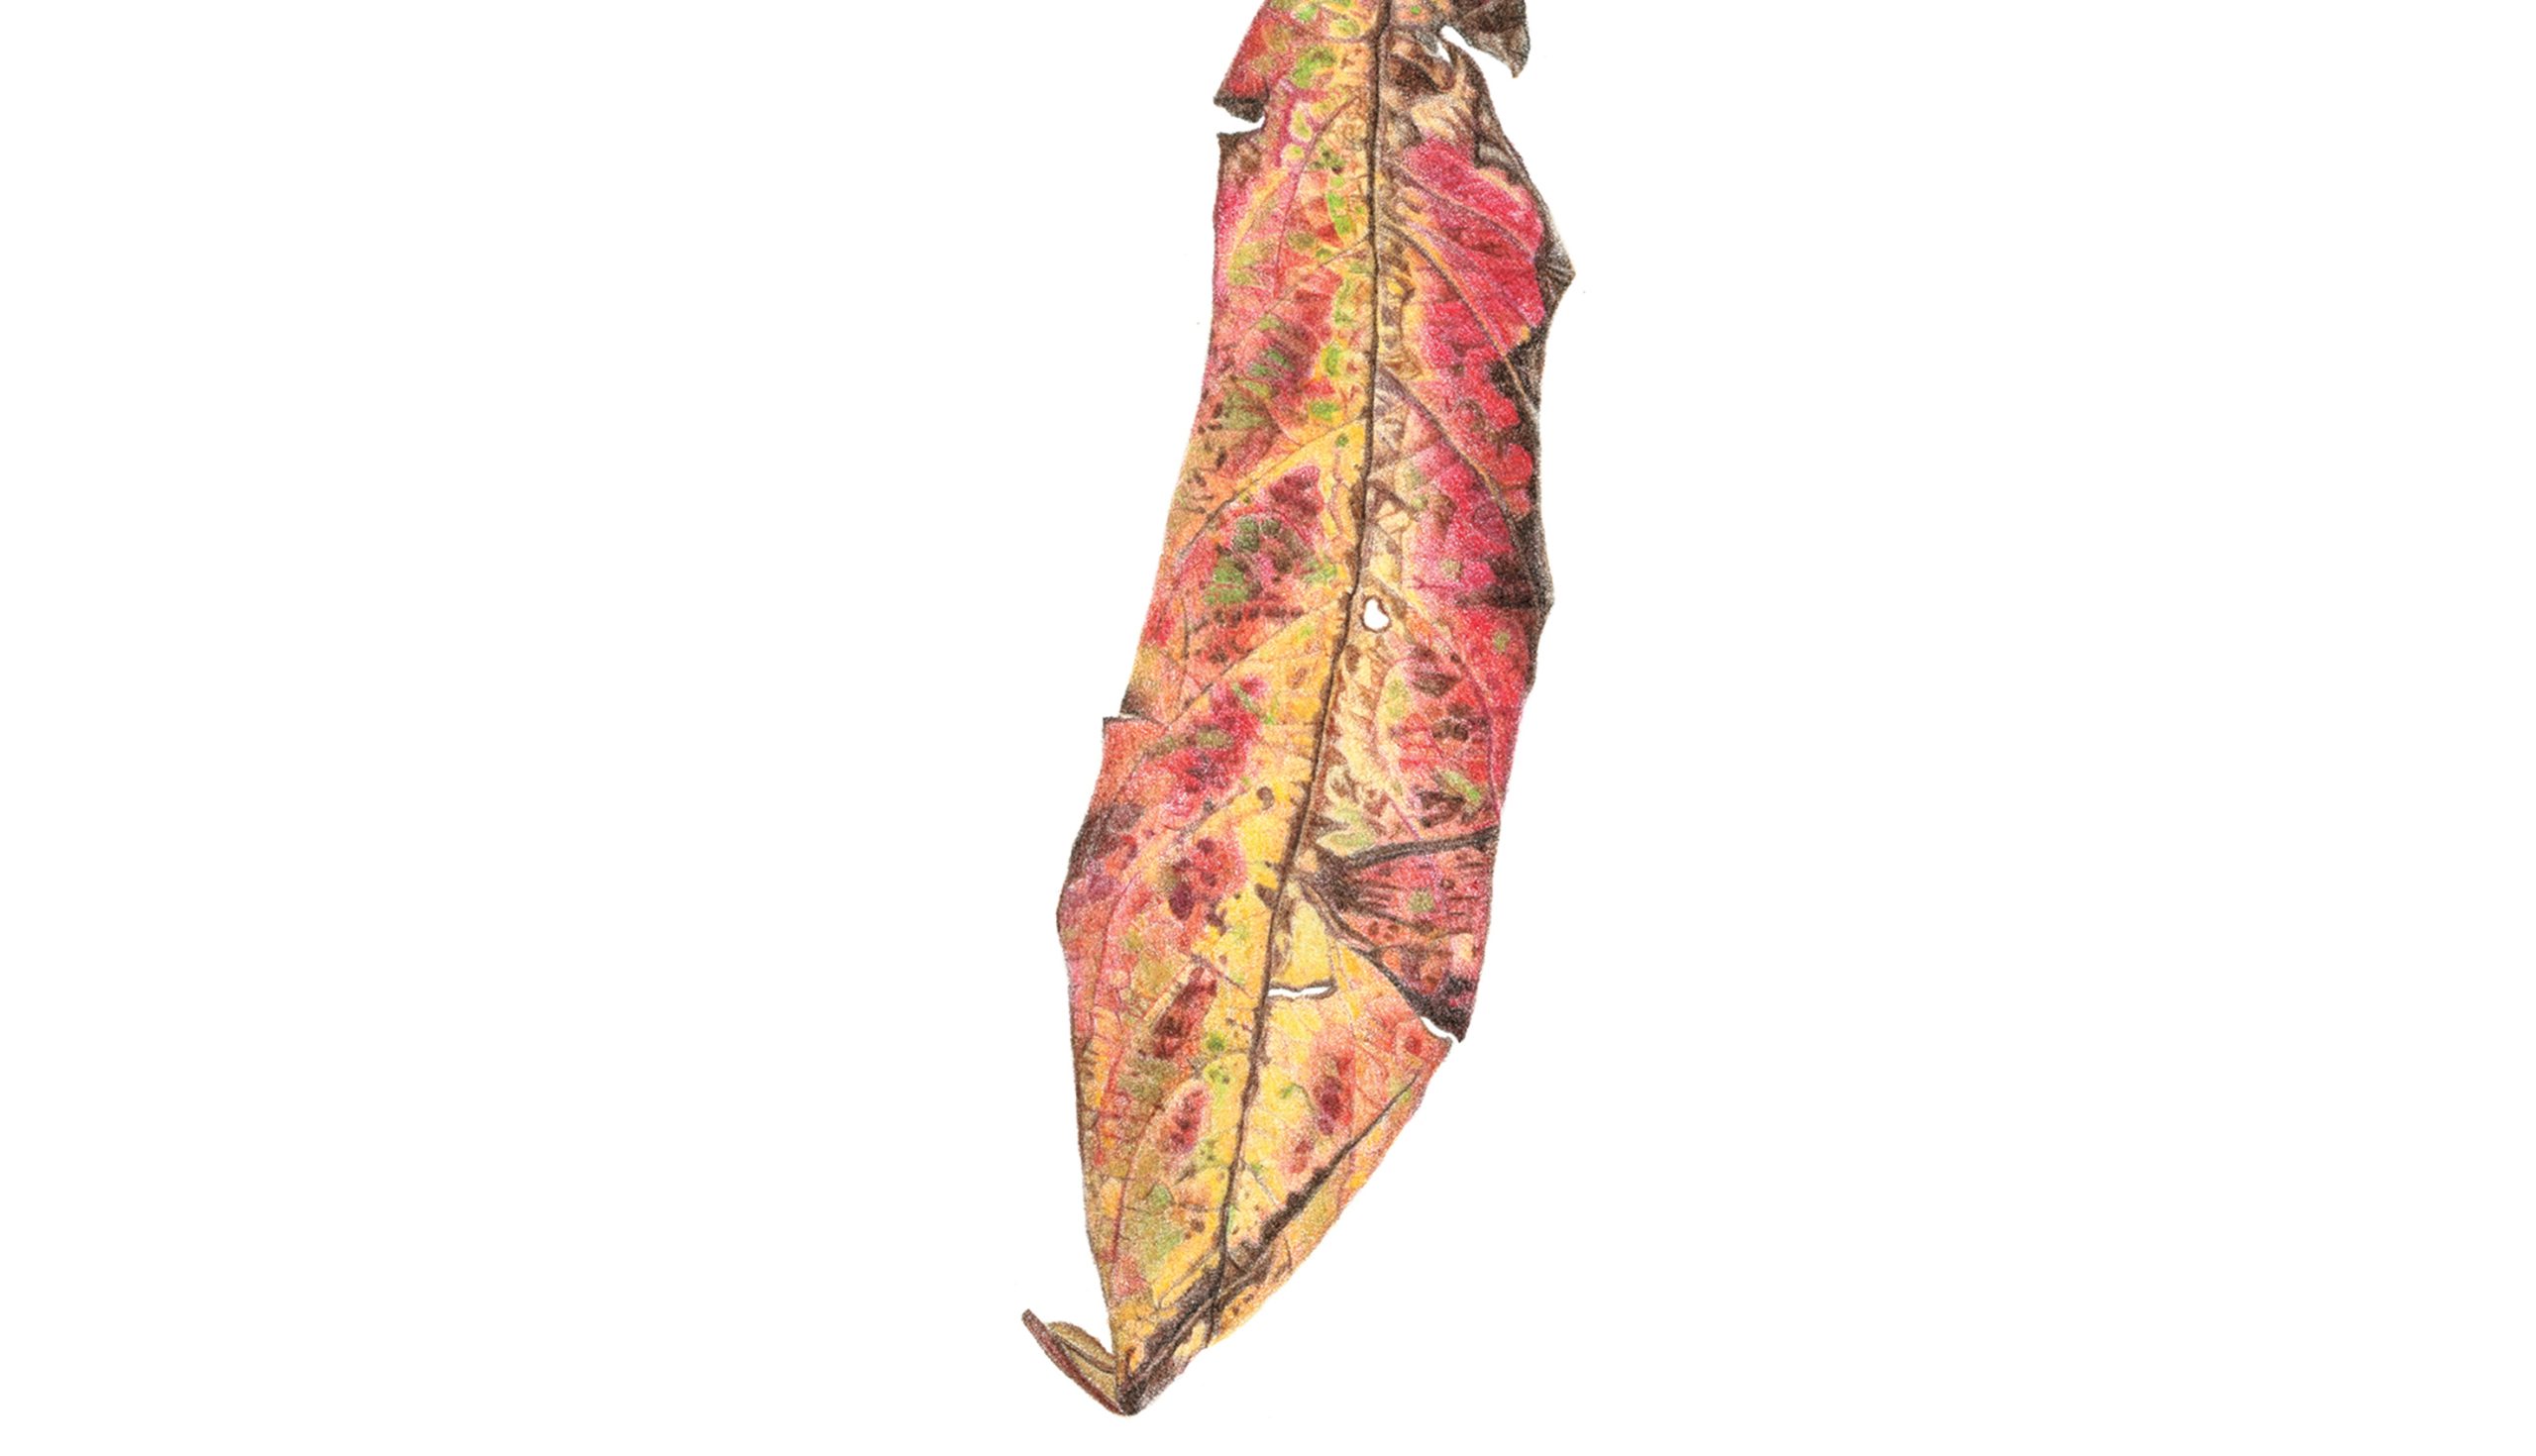 Small Things - leaf - unidentified - polychomos pencils on Fabriano 5 by Marianne Hazlewood